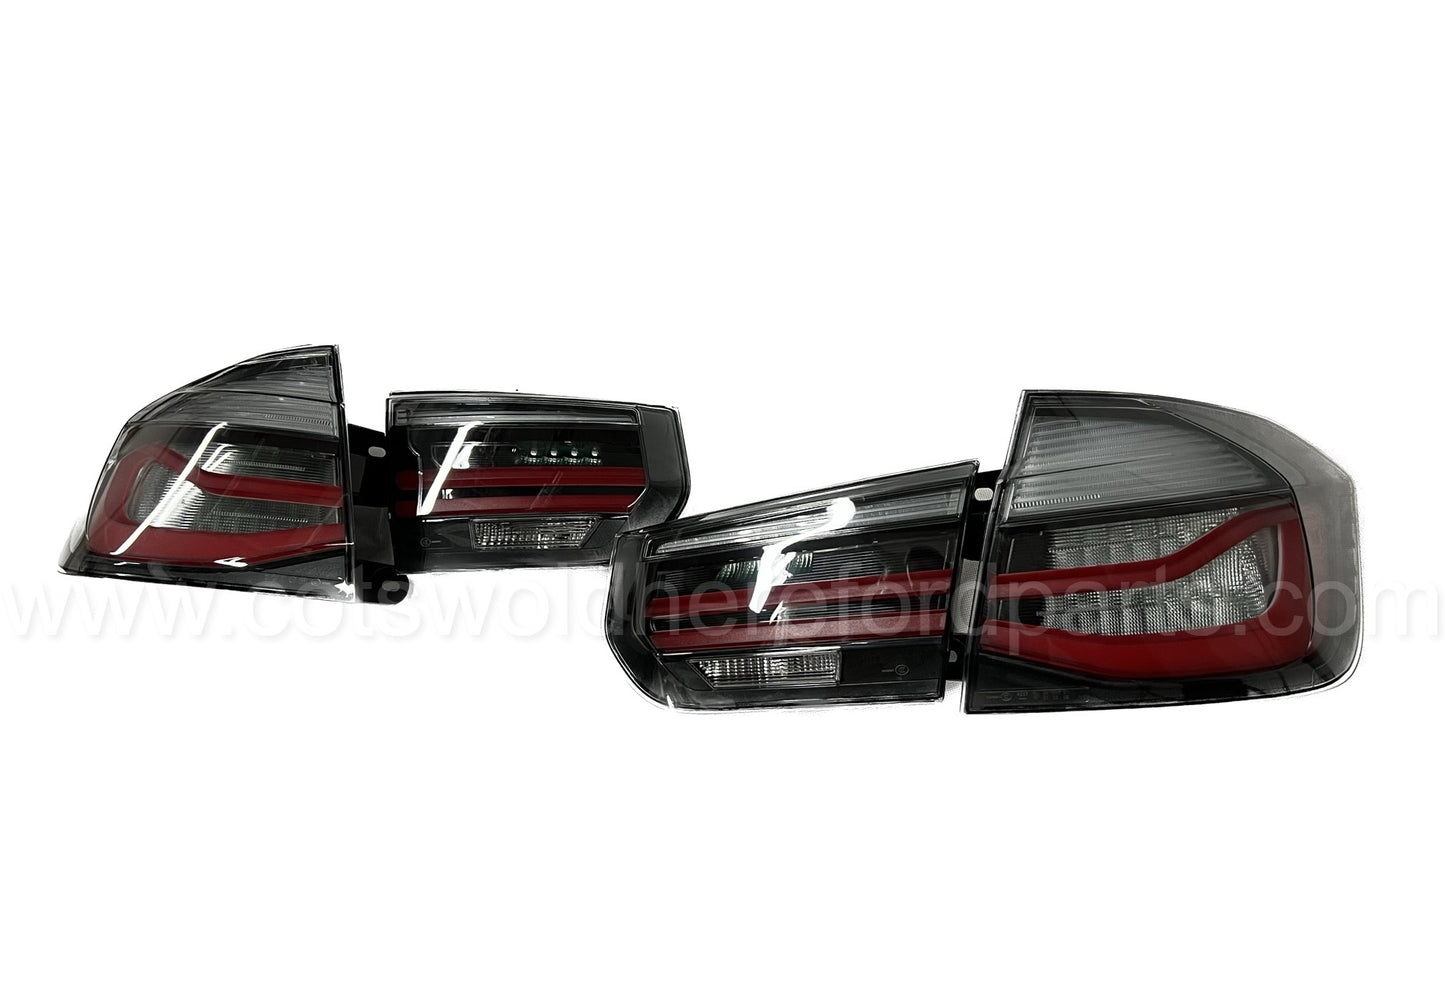 Genuine BMW M Performance Black Rear Lights 3 Series F30 M3 F80 63212450105